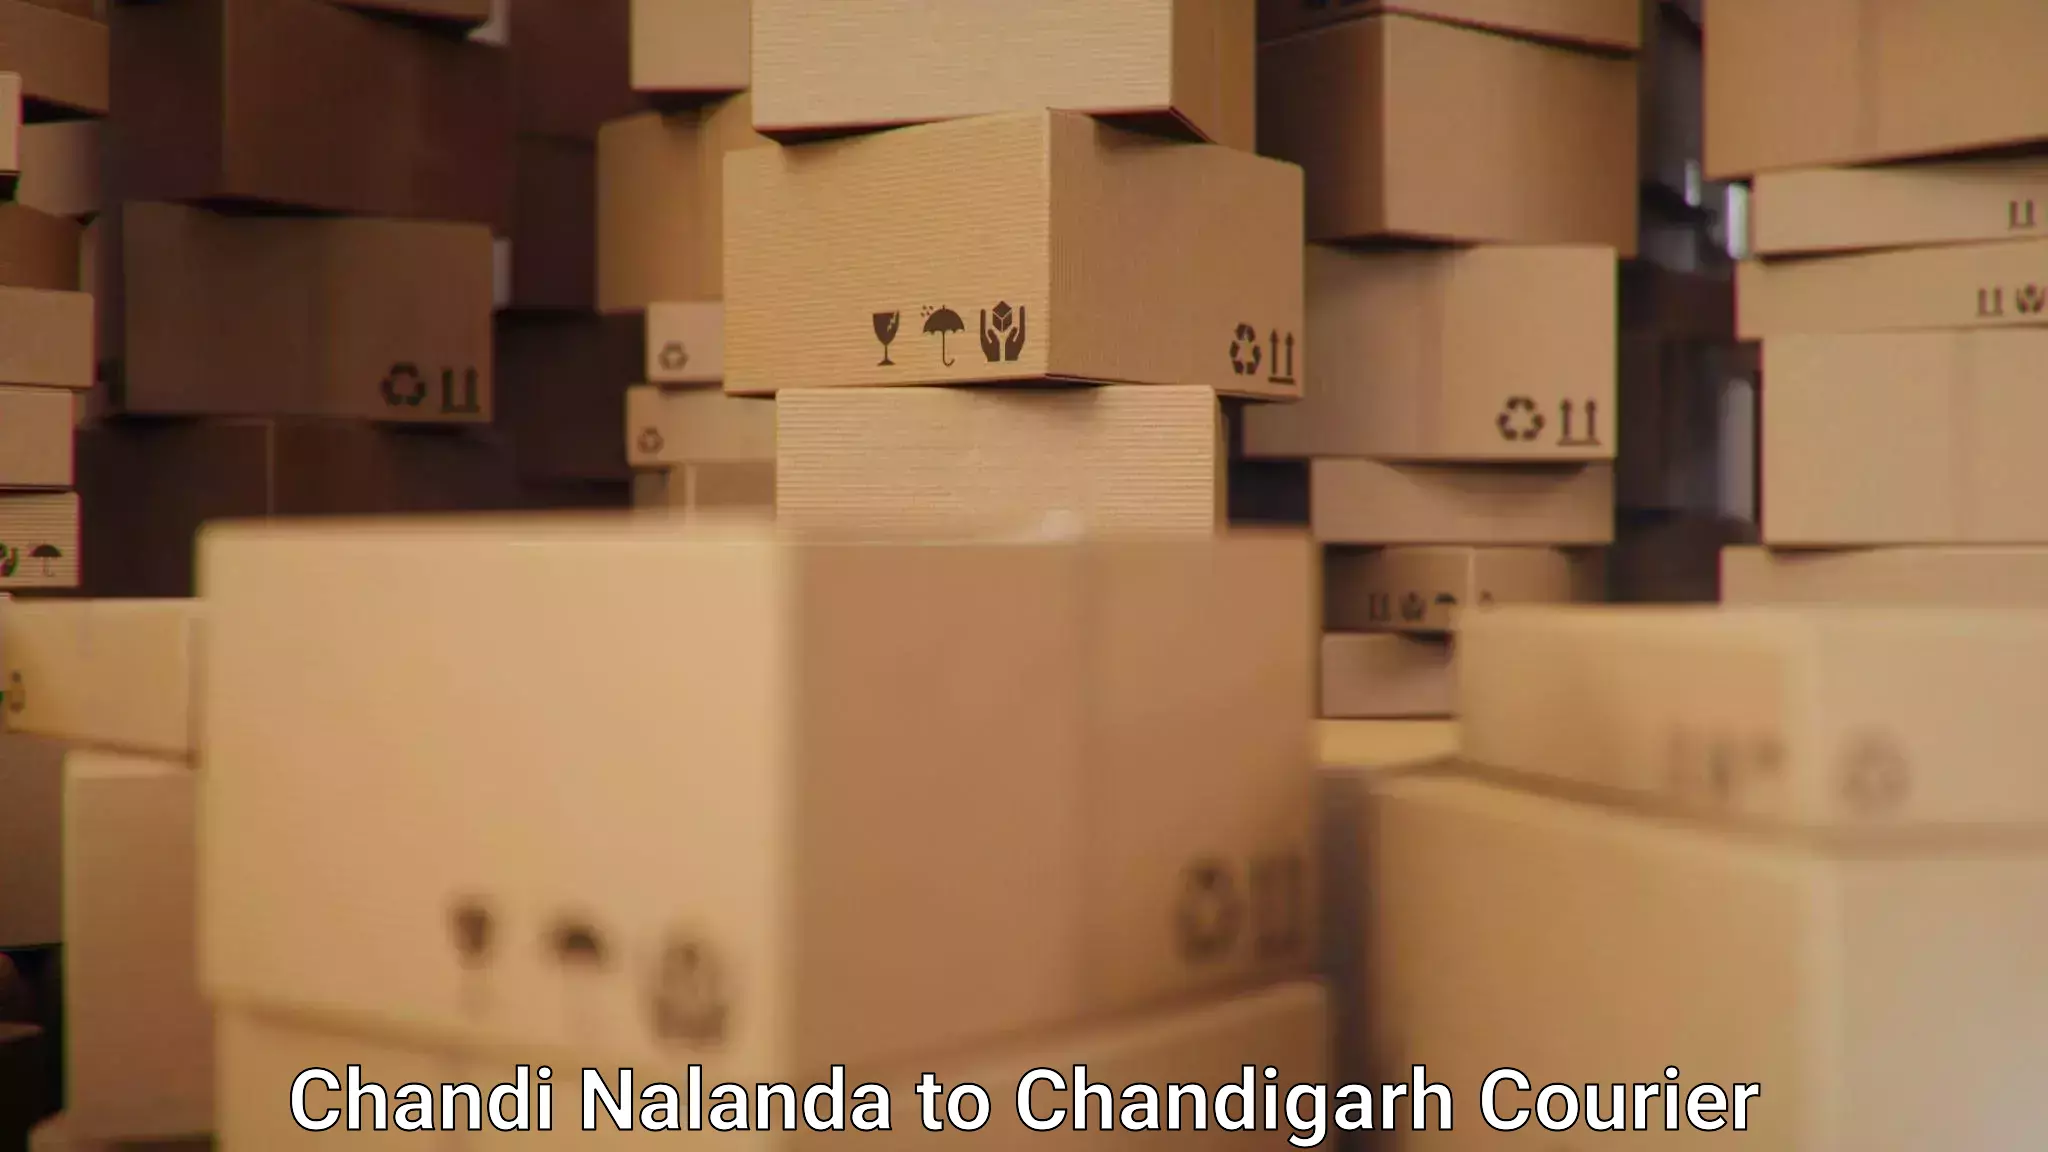 Multi-modal transportation Chandi Nalanda to Chandigarh